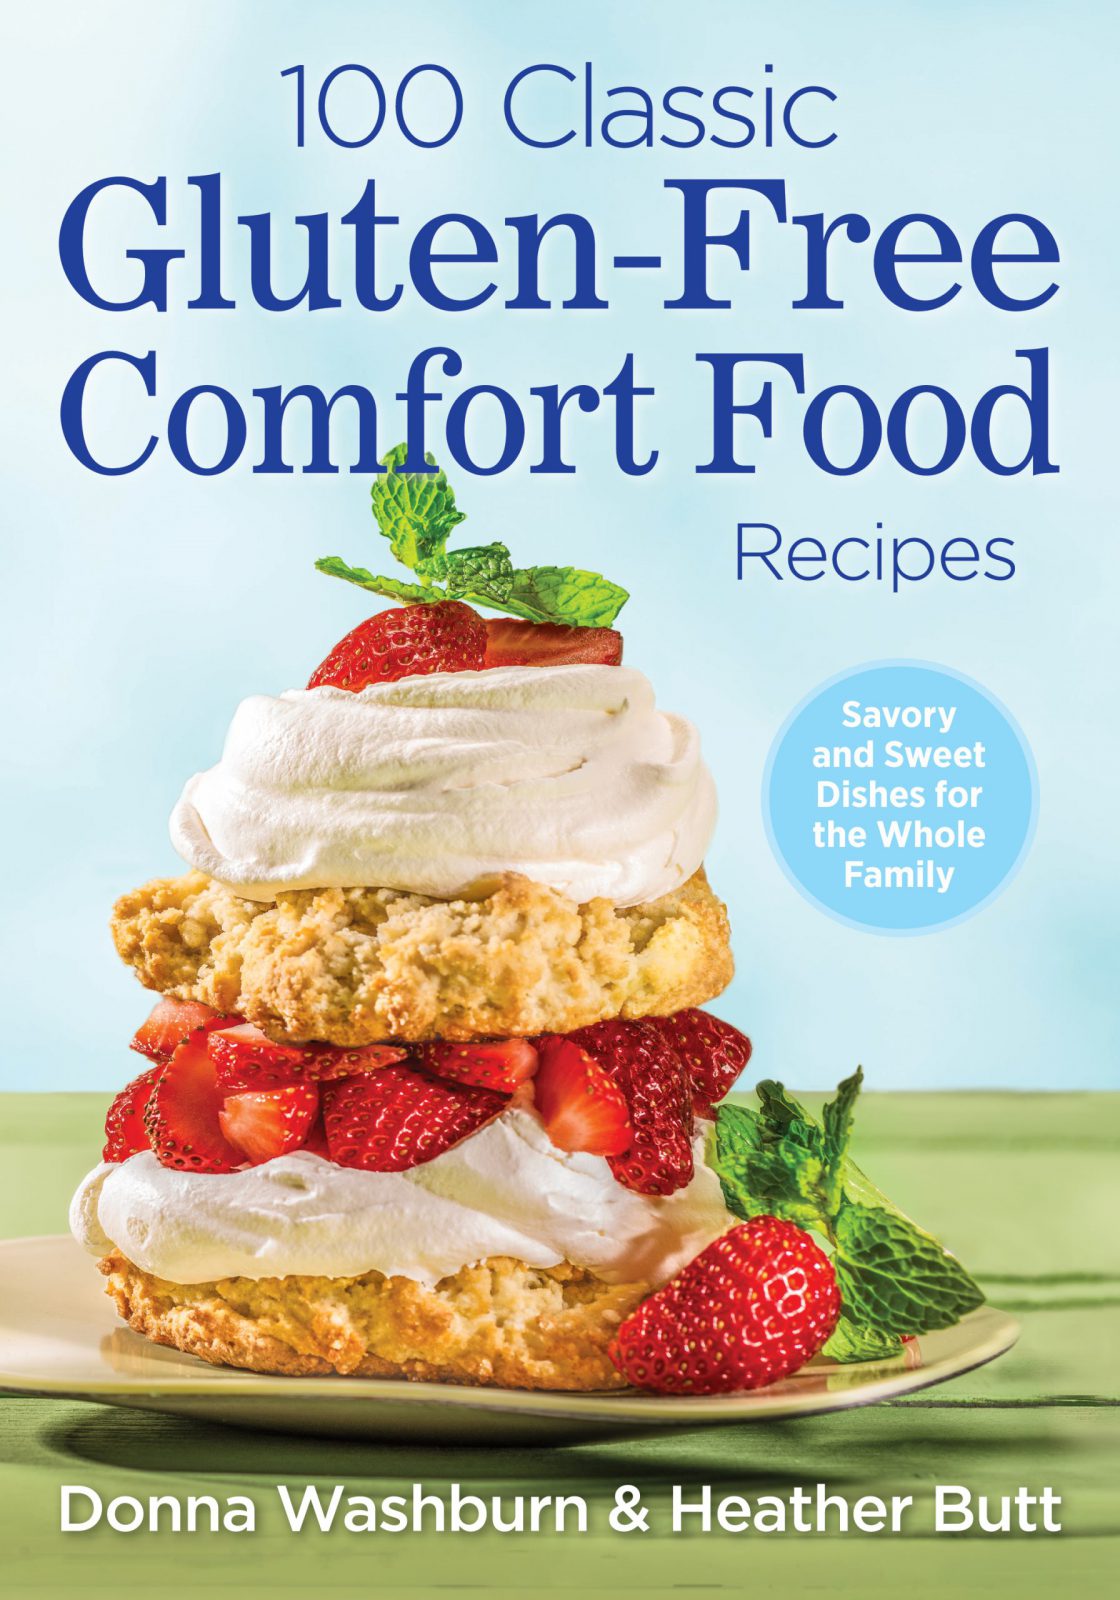 100 Classic Gluten-Free Comfort Food Recipes